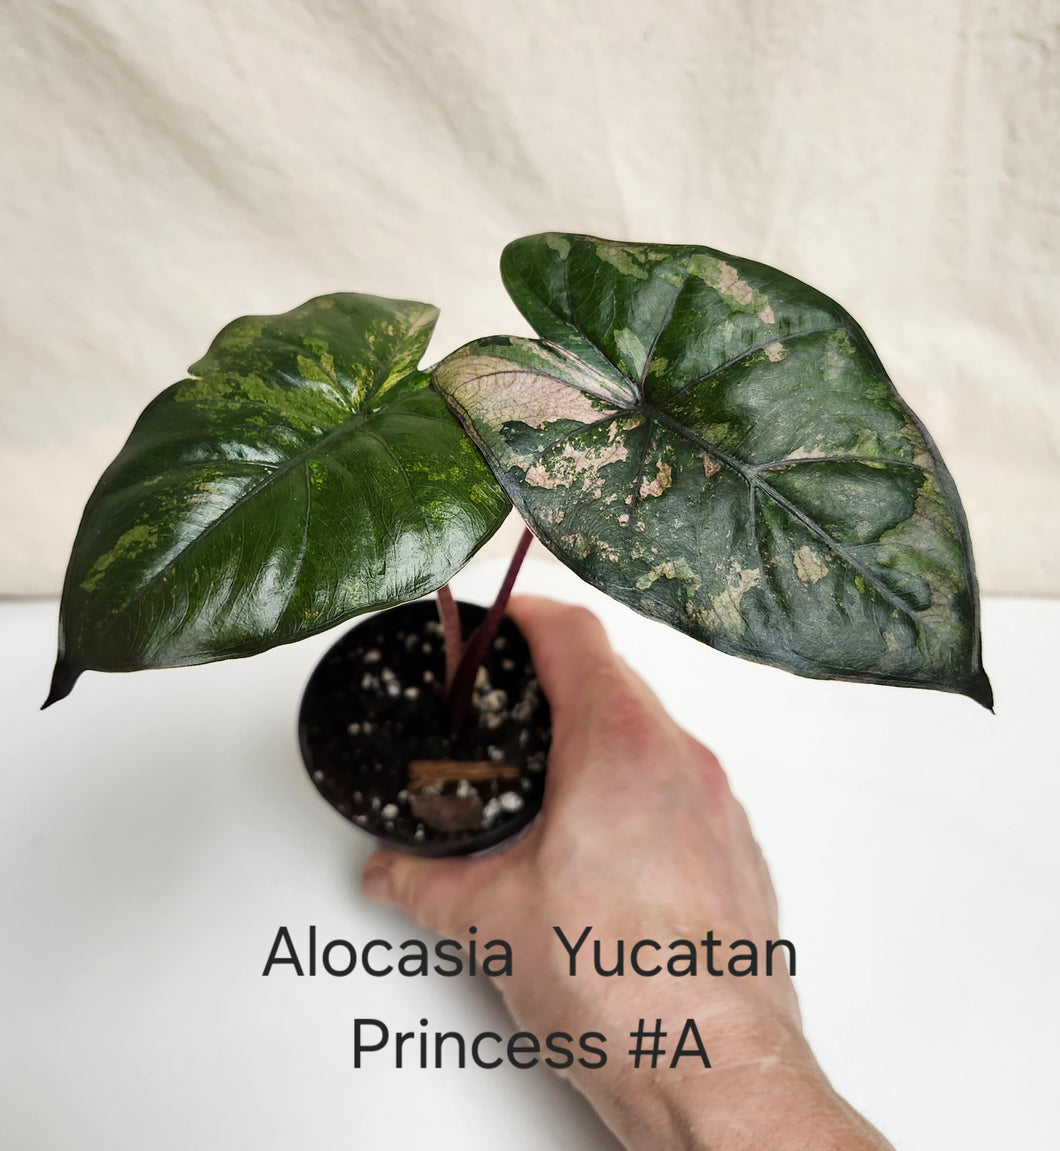 Alocasia yucatan variegata #A